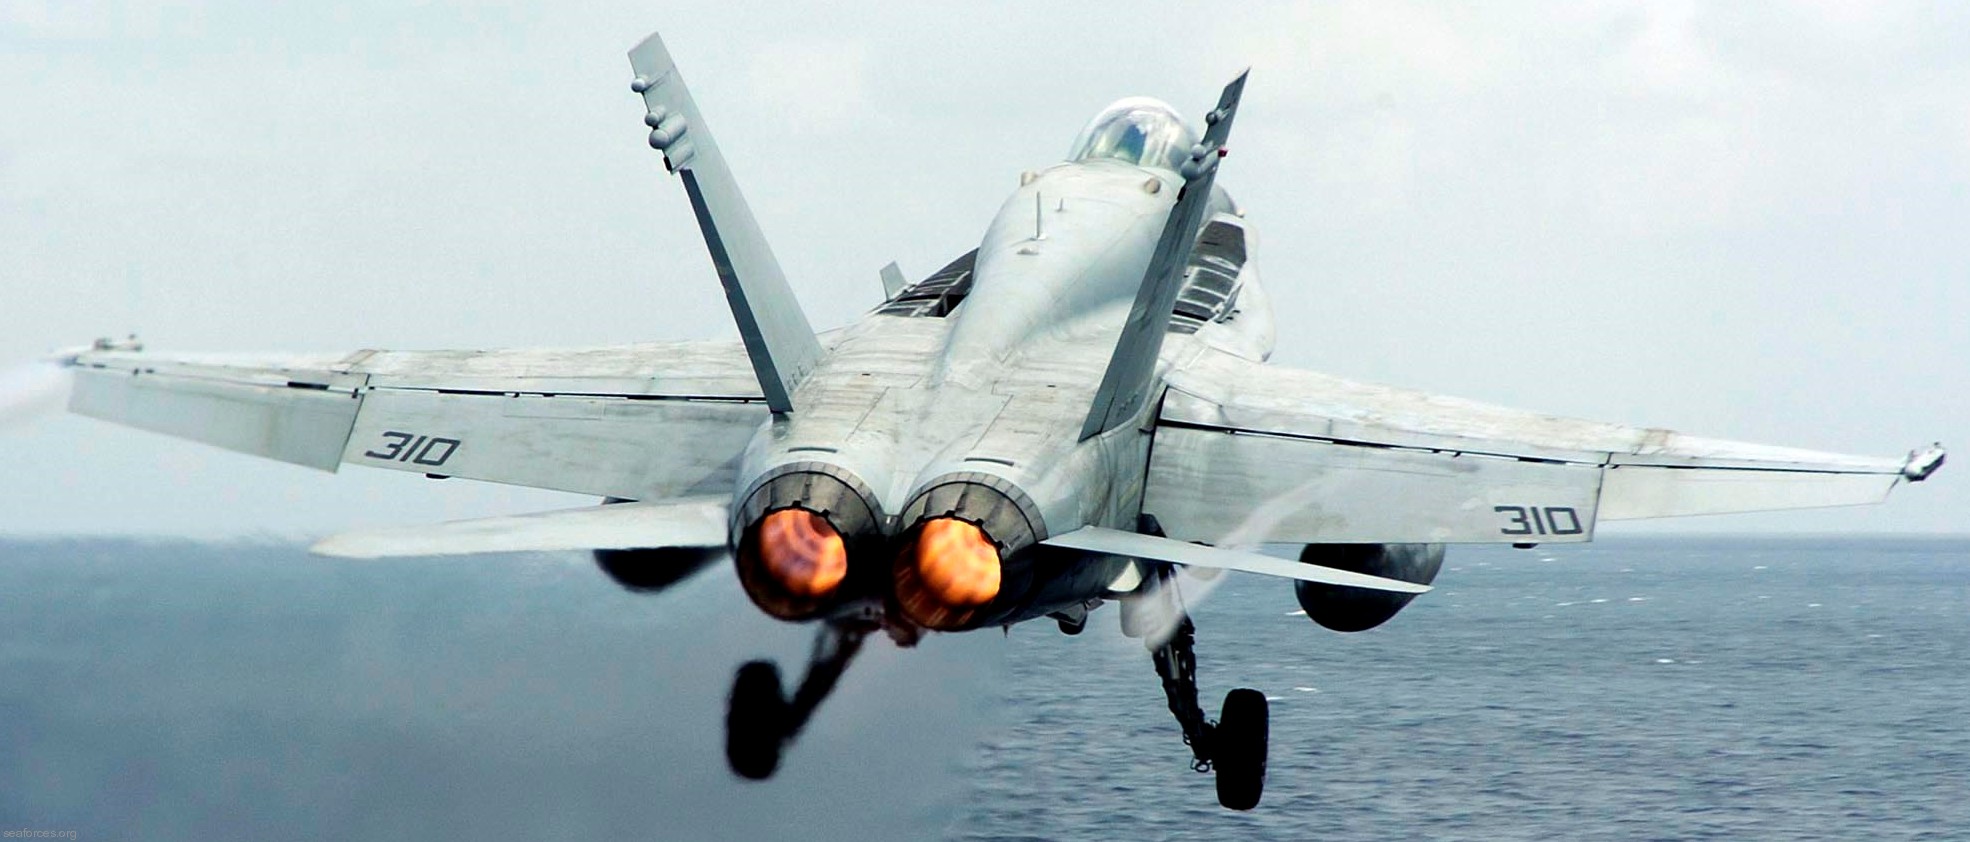 vfa-151 vigilantes strike fighter squadron navy f/a-18c hornet carrier air wing cvw-2 uss abraham lincoln cvn-72 66